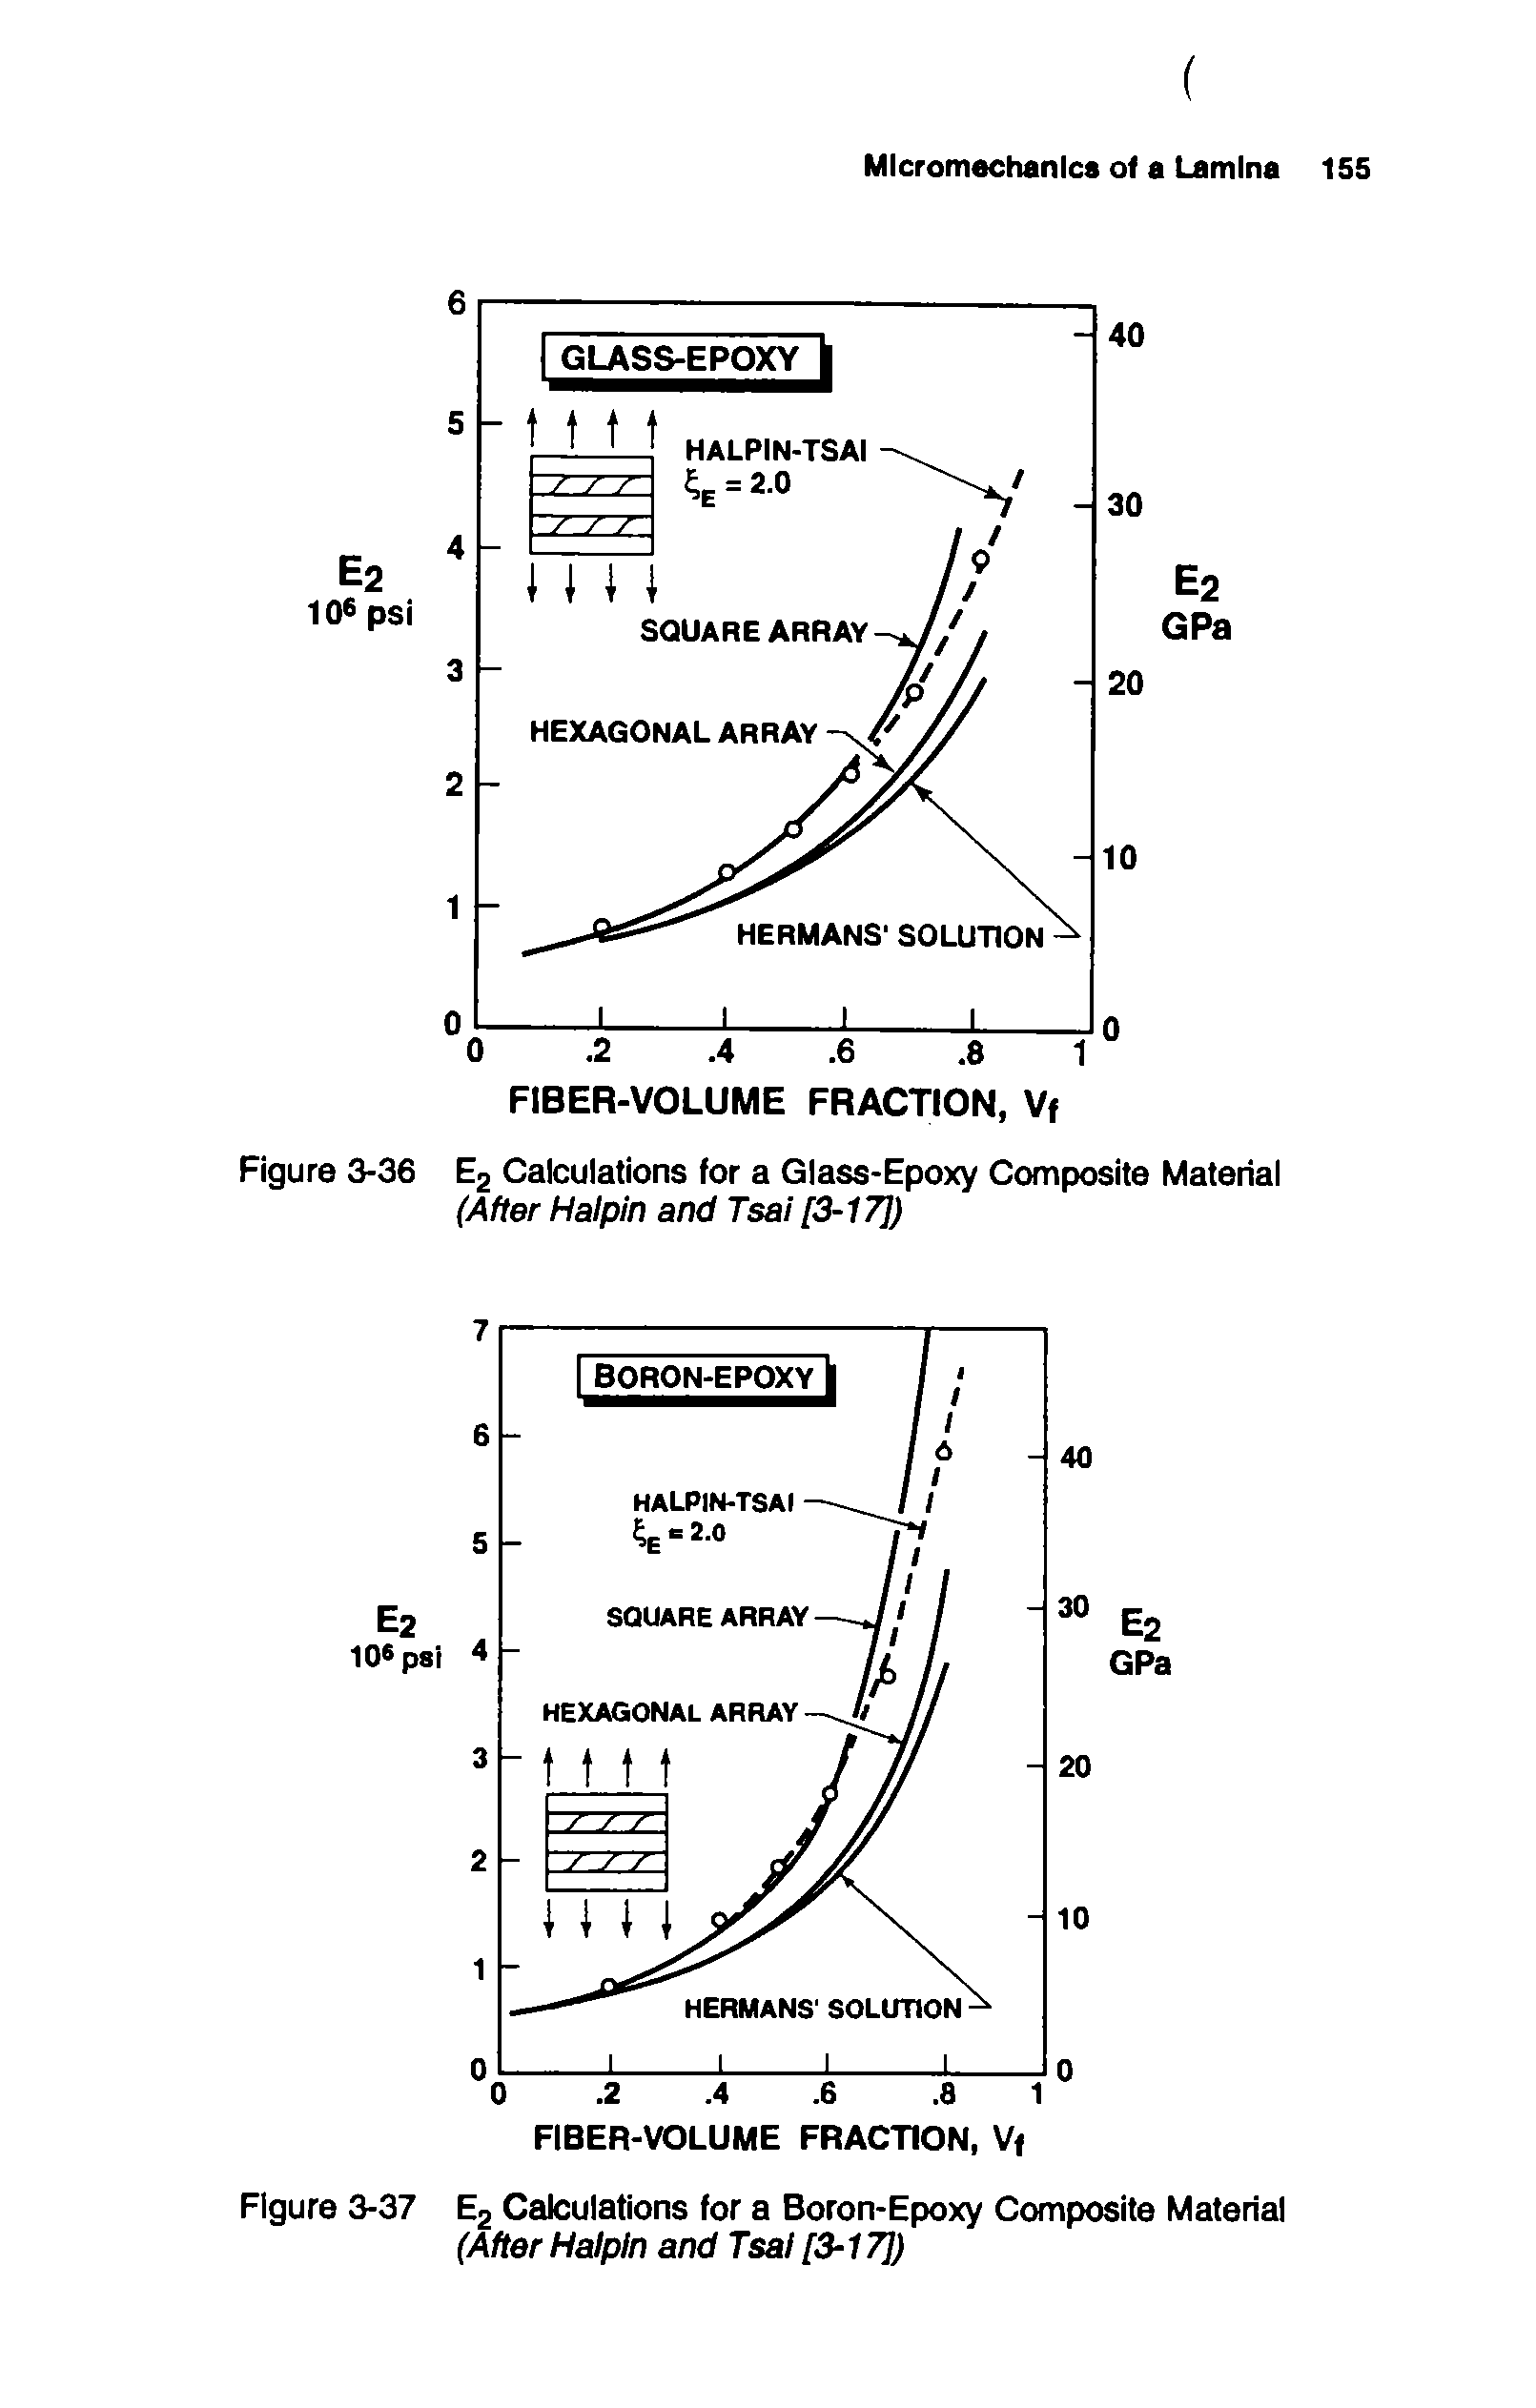 Figure 3-37 E2 Calculations for a Boron-Epoxy Composite Material (After Halplrt and Tsai [3-17])...